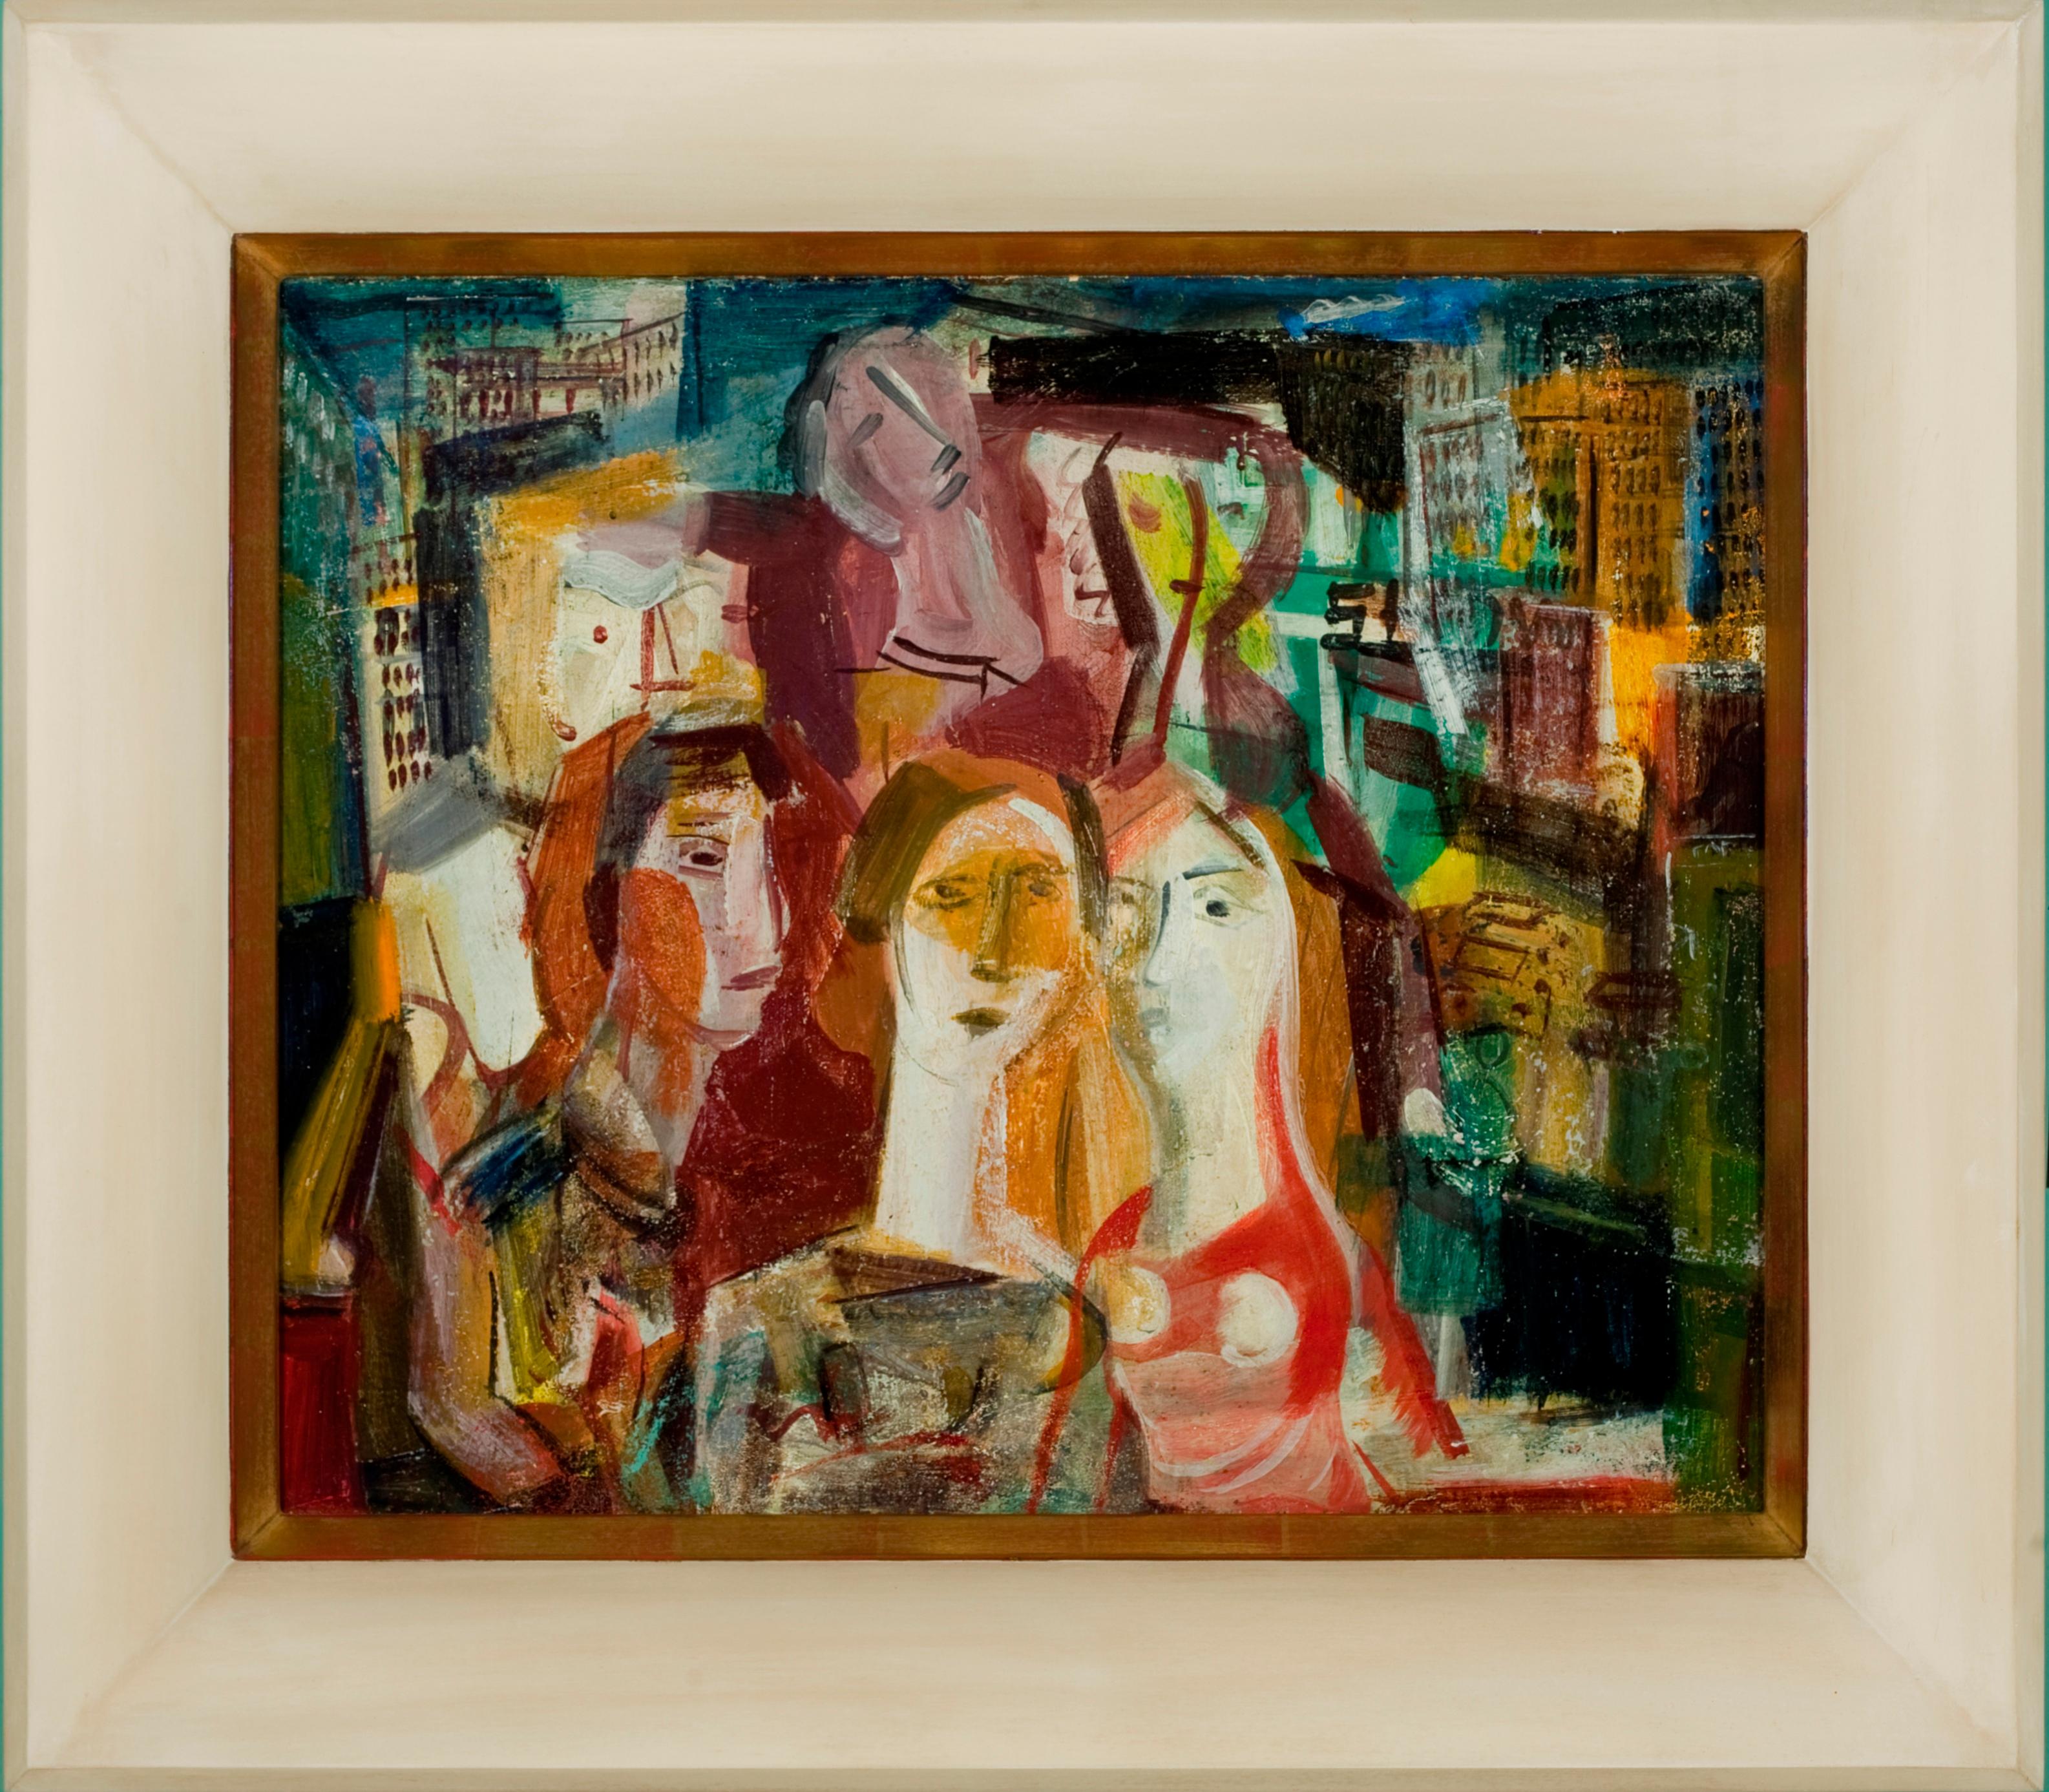 Abstract Painting Vaclav Vytlacil - « The Evening Crowd, Manhattan » (la foule du soir)